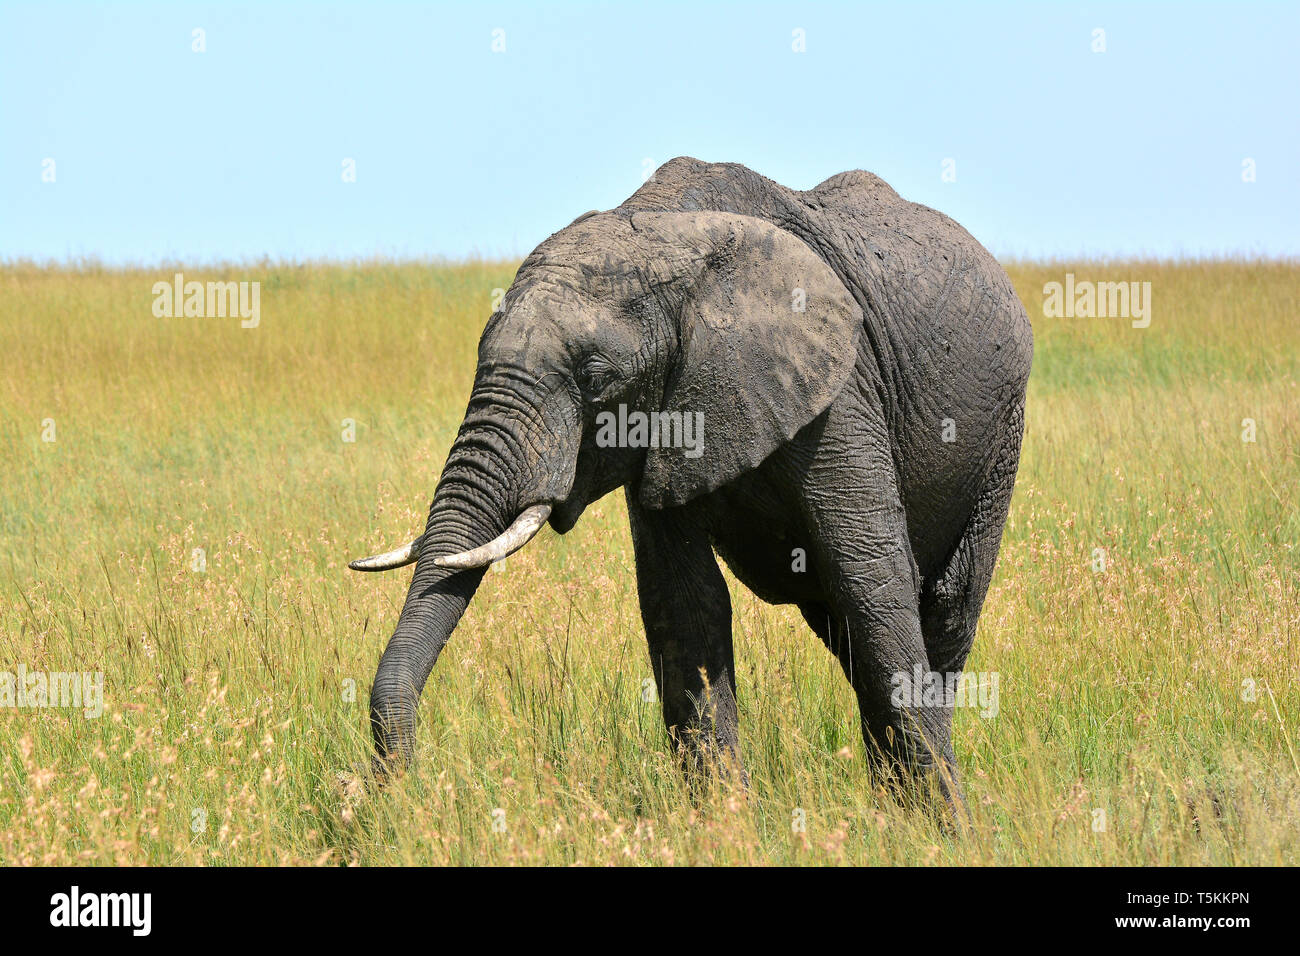 Loxodonta africana, Buschelefant Steppenelefant Afrikanischer, Afrikanischer Elefant, Afrikanischer, afrikai elefánt elephant de savane africaine, Banque D'Images